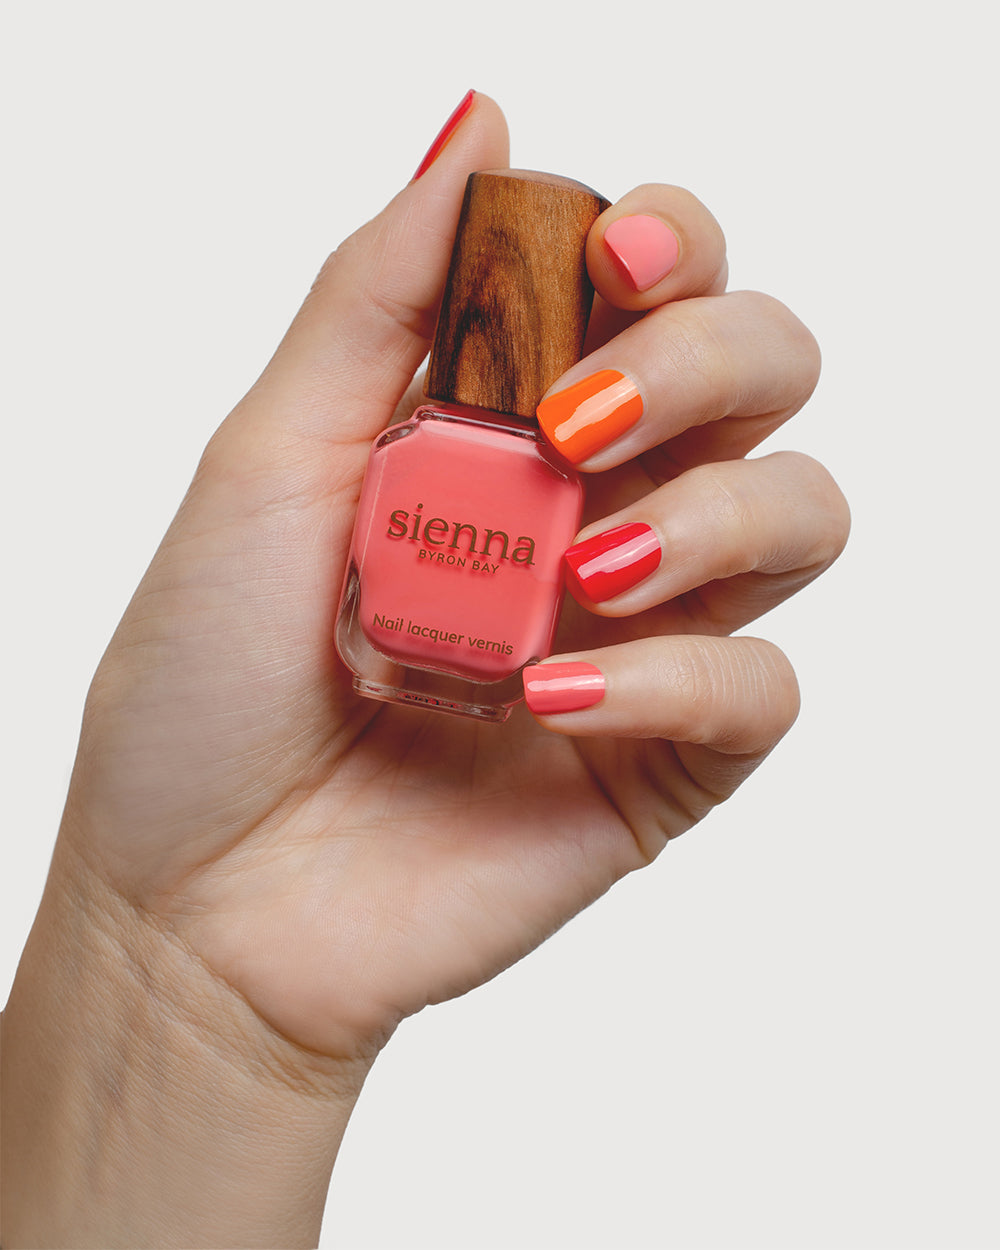 bright pink and orange nail polish hand swatch on fair skin tone by sienna byron bay